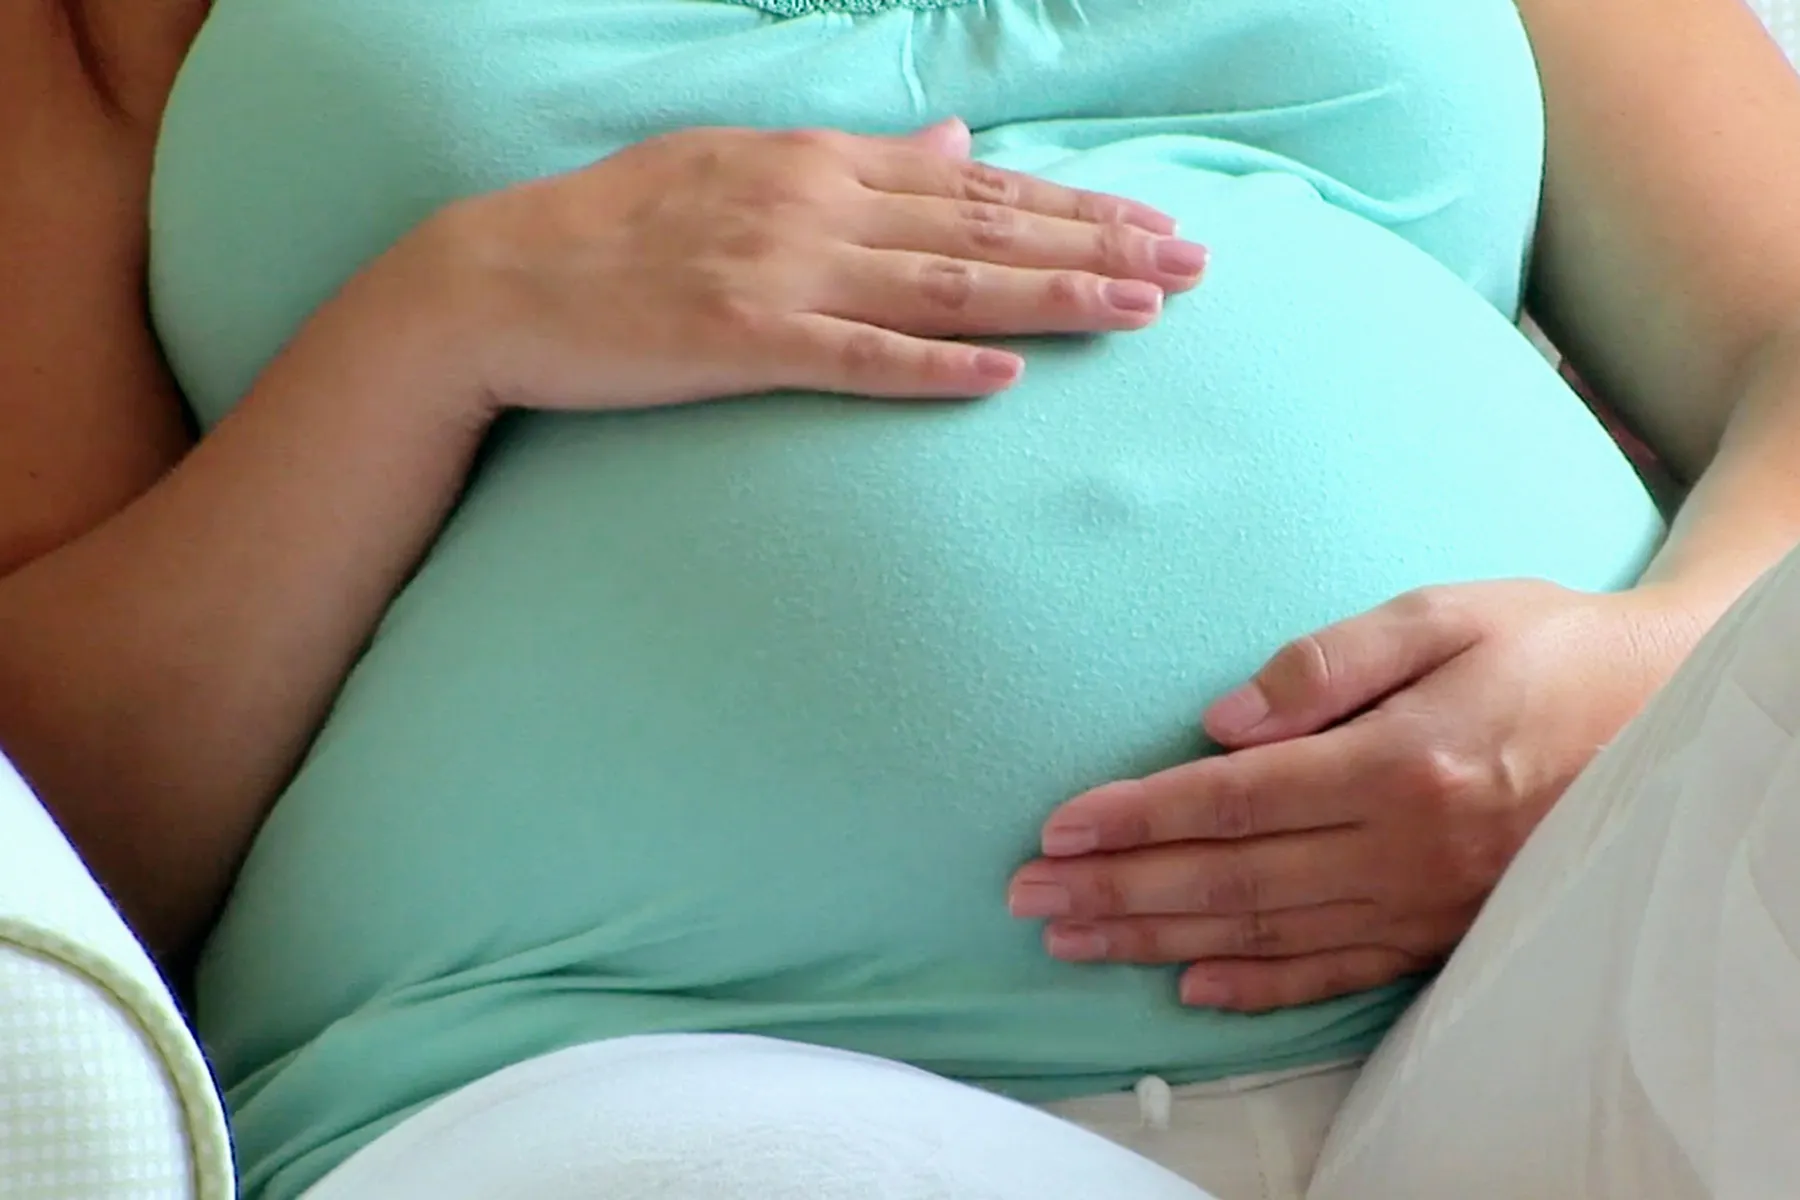 Hypertension in Pregnancy Is Getting More Common for Gen Z Women